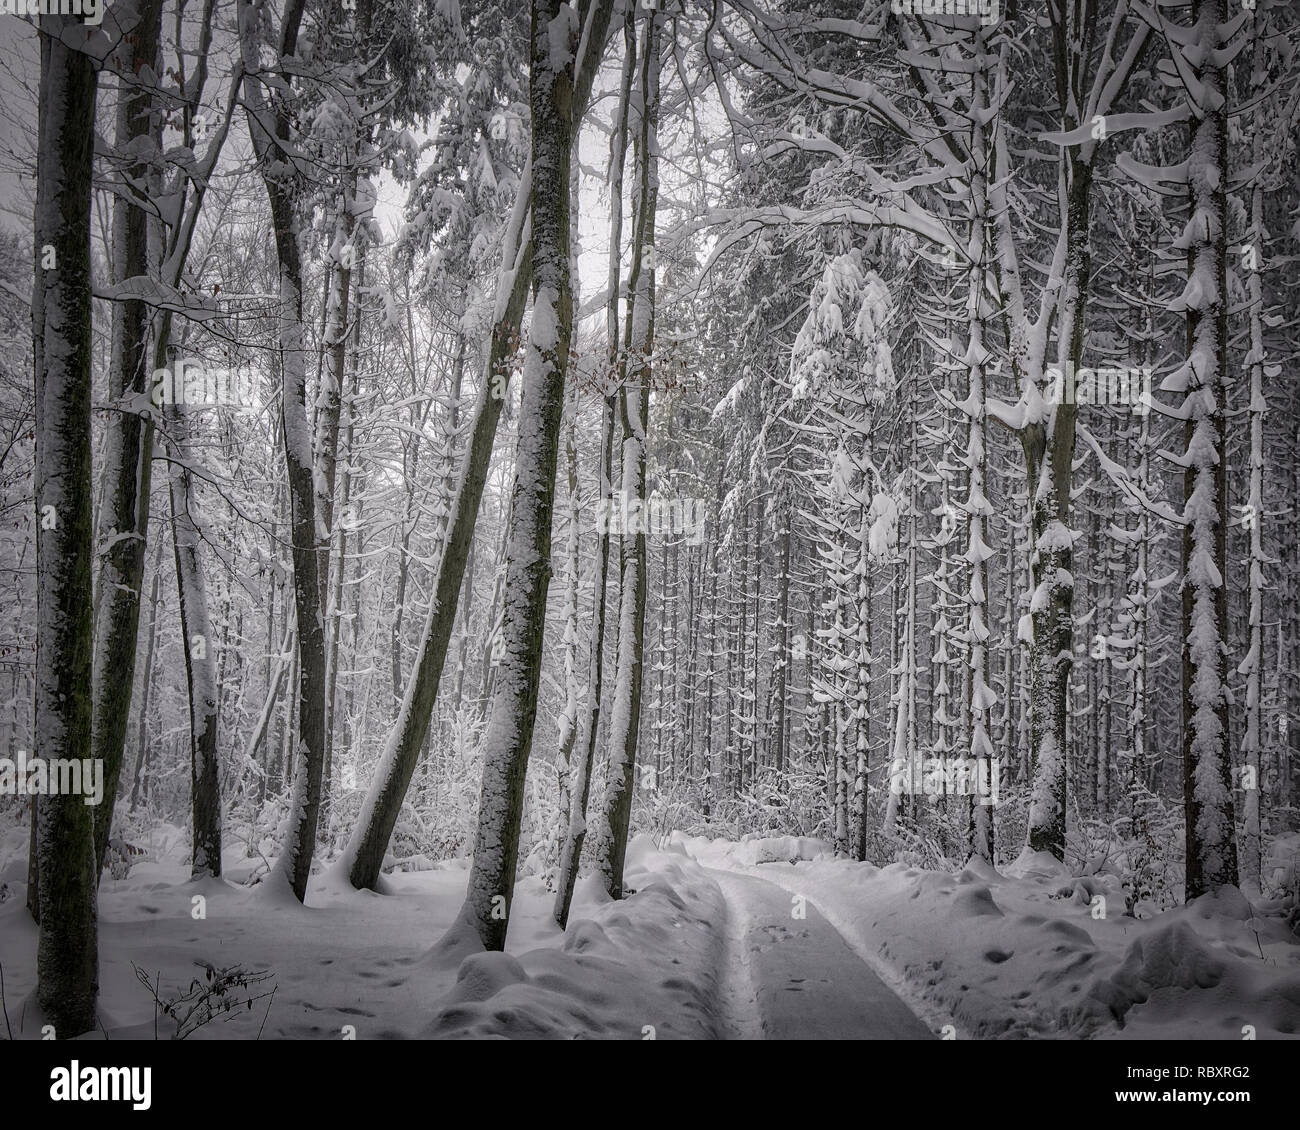 DE - BAVARIA: Wintry forest scene near Bad Tölz  (HDR-Image) Stock Photo